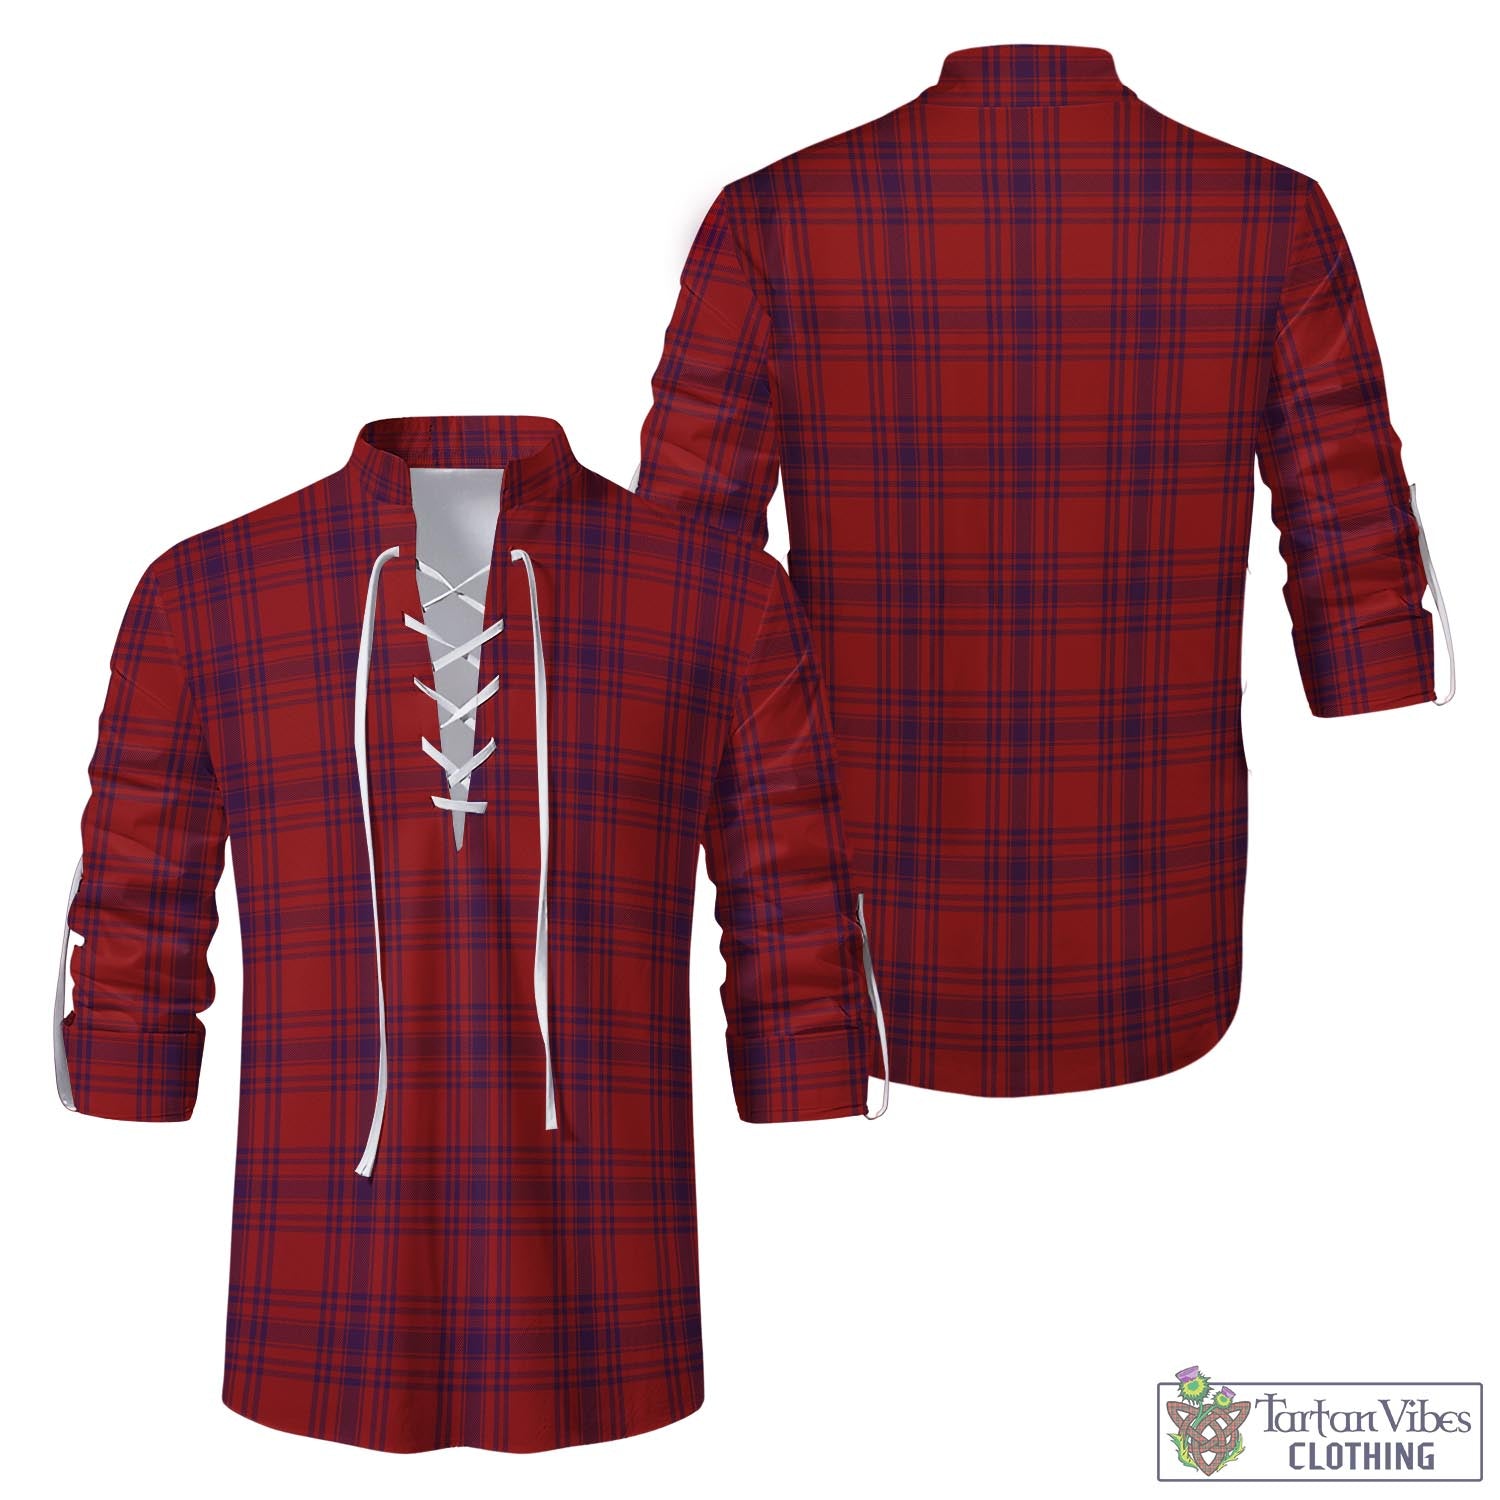 Tartan Vibes Clothing Kyle Tartan Men's Scottish Traditional Jacobite Ghillie Kilt Shirt